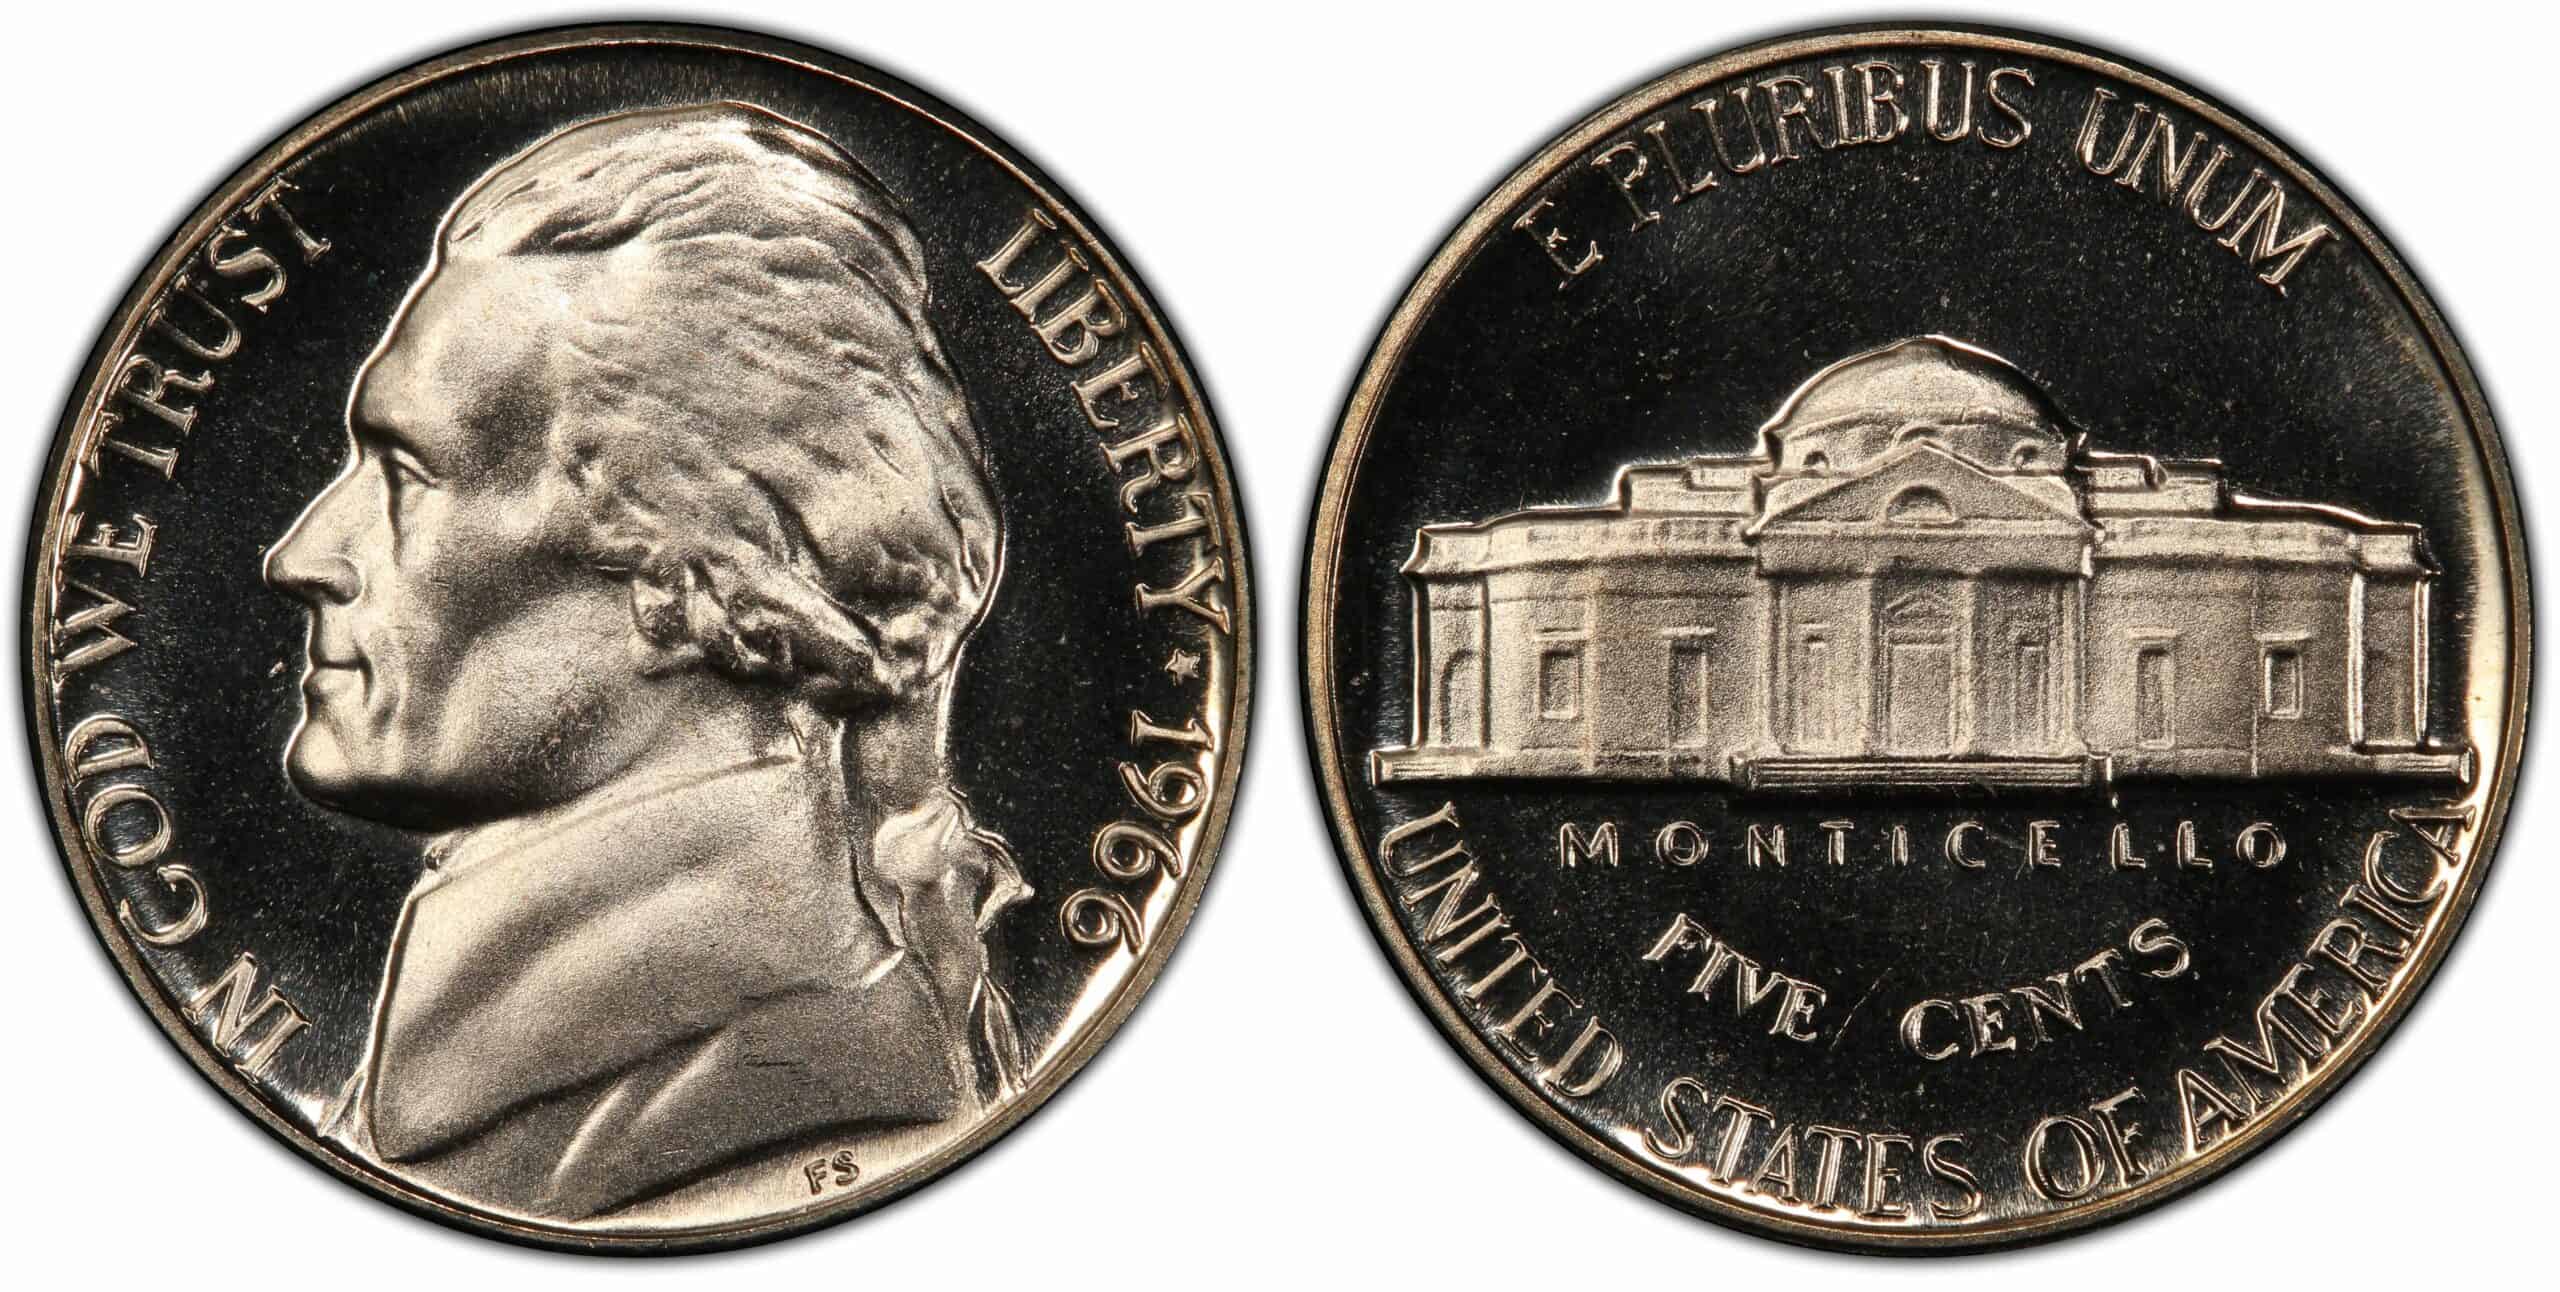 1966 No Mint mark Jefferson nickel Special strike Value